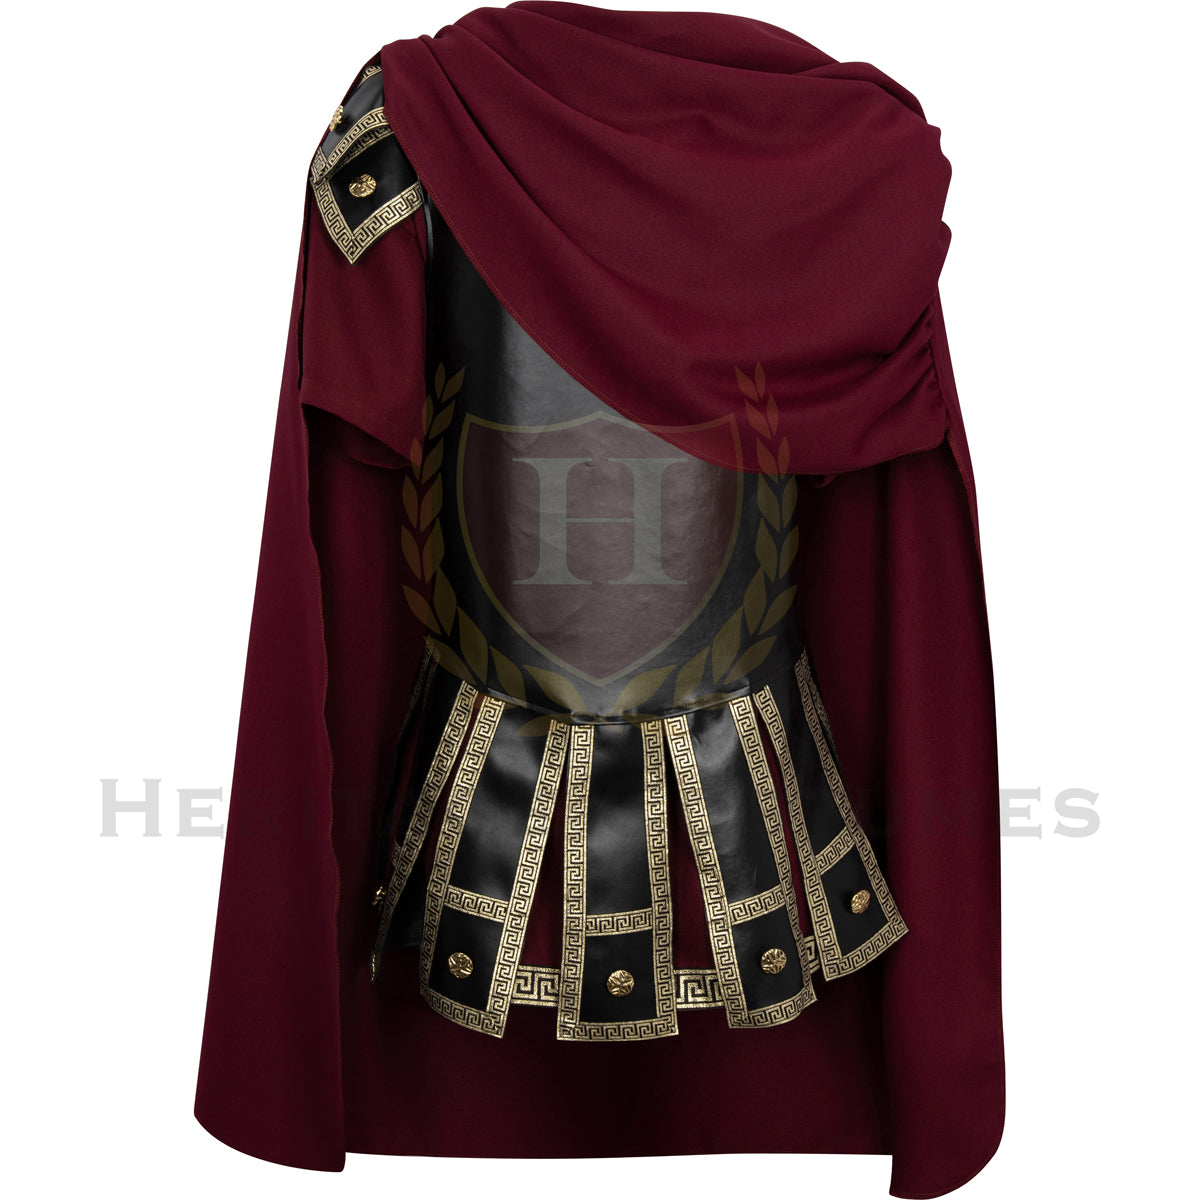 Pontius Pilate Military Uniform, Biblical Passion Play Costume